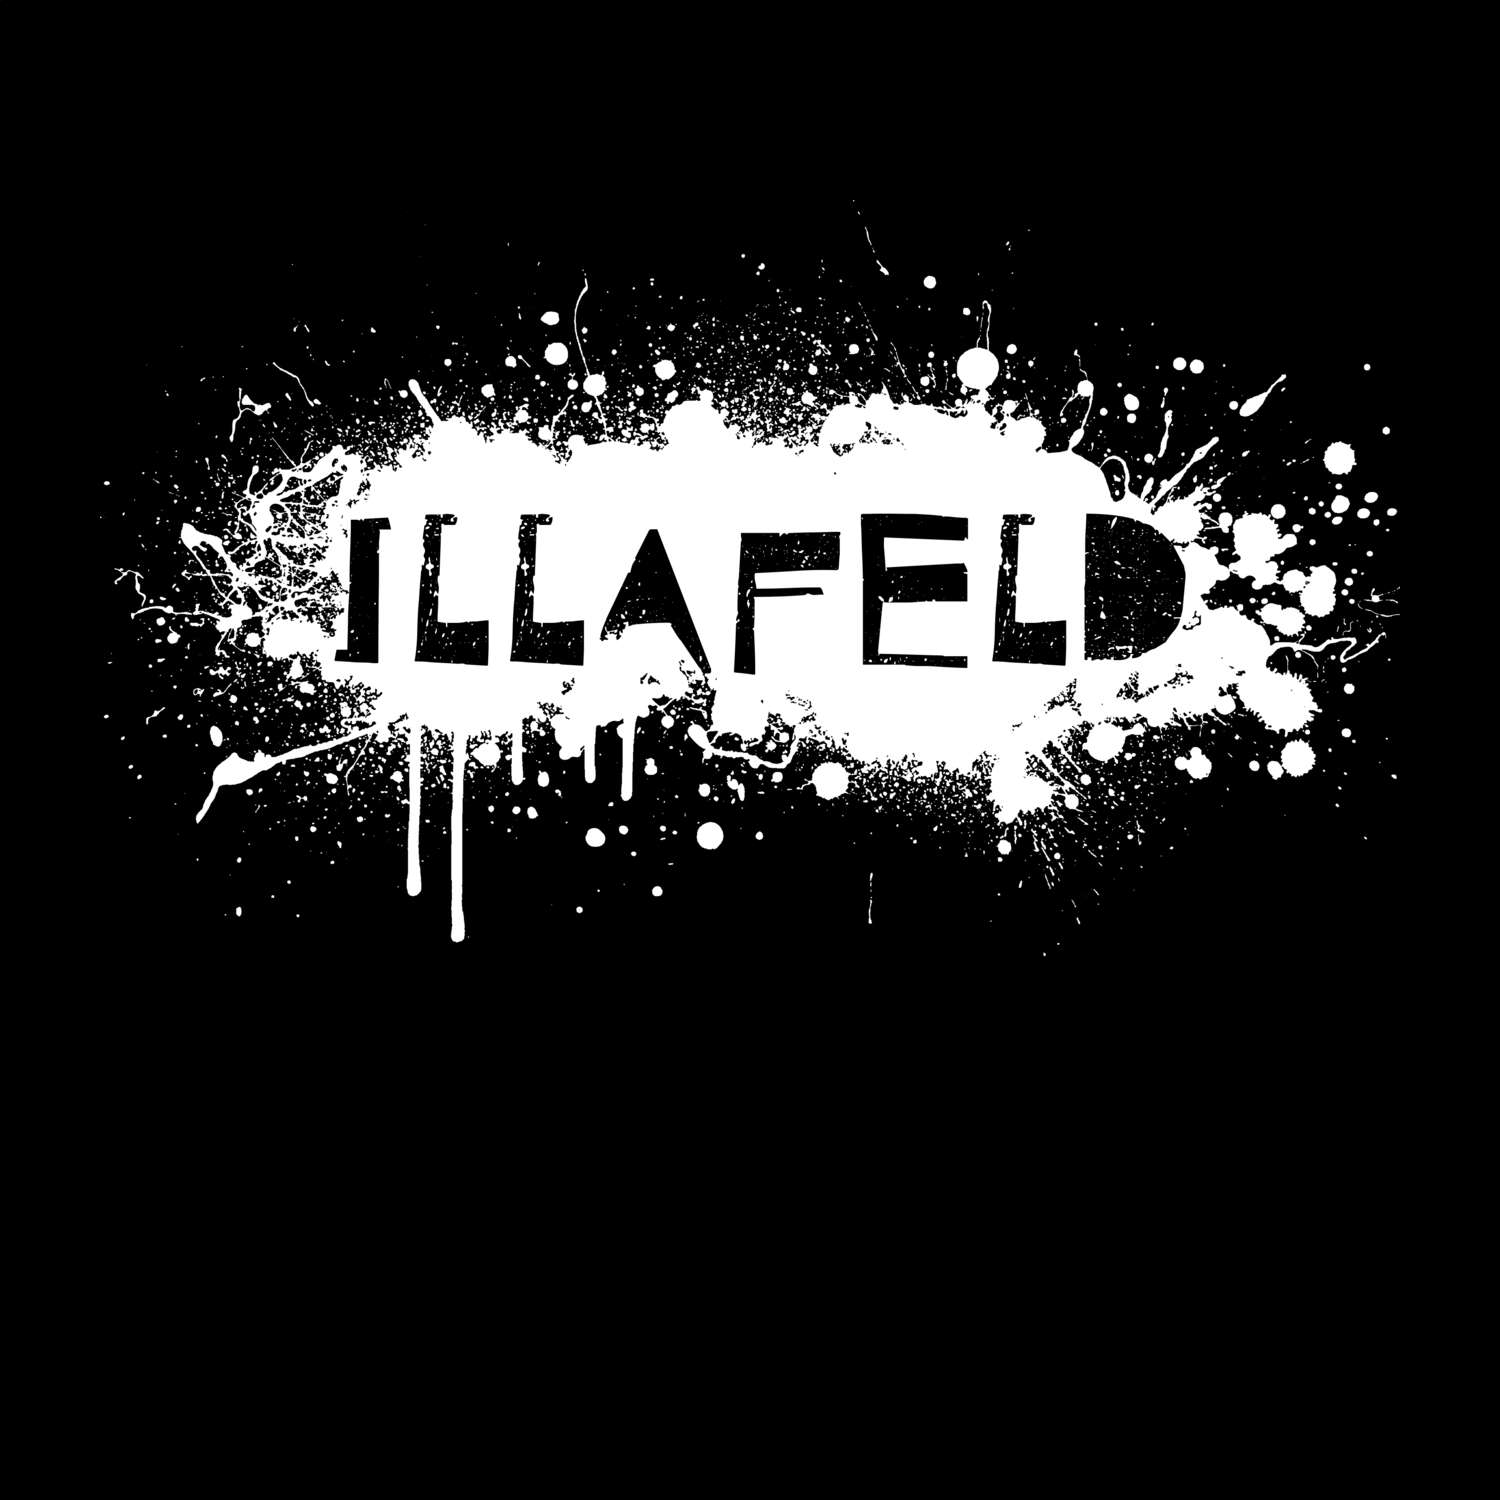 Illafeld T-Shirt »Paint Splash Punk«